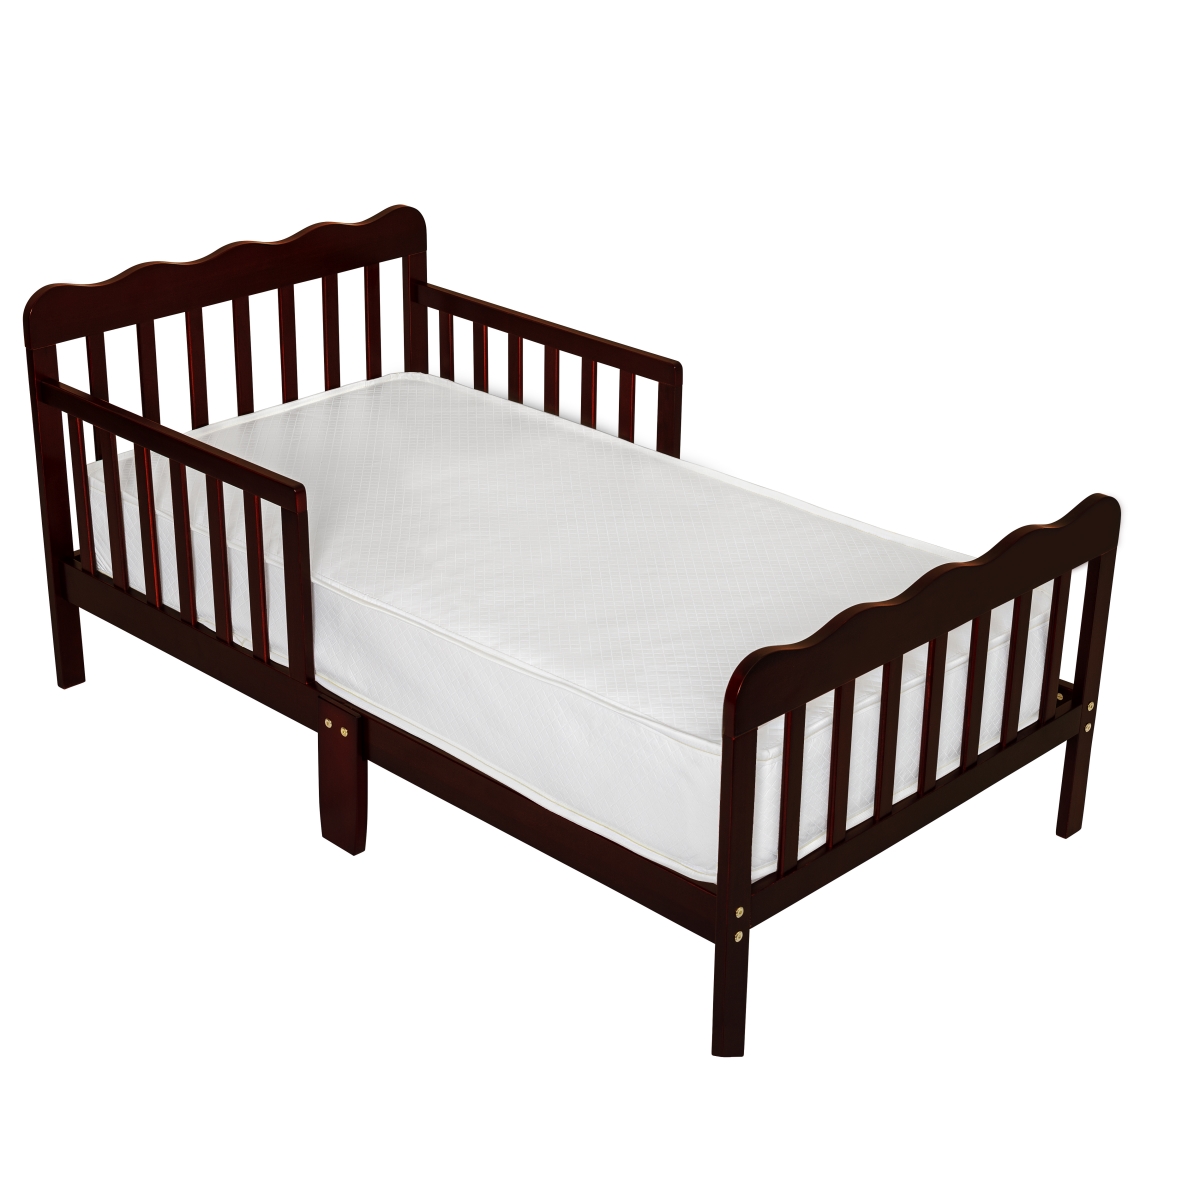 830-e Wood Toddler Bed, Espresso